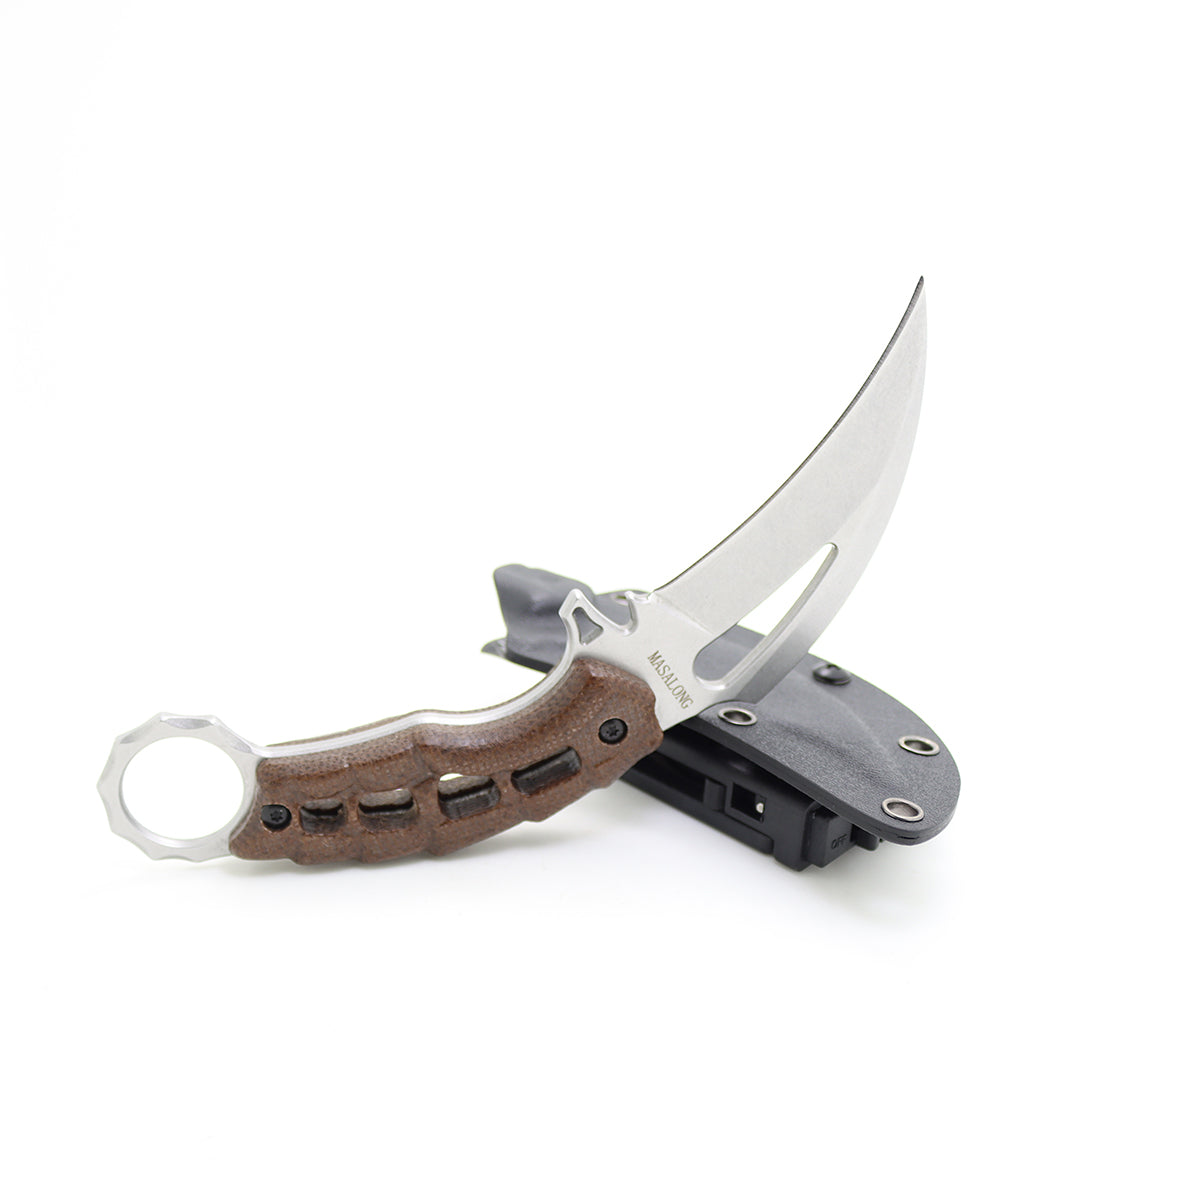 MASALONG Saucerman KNI185 Claw Knife Hollow Handle with kydex Sheath  karambit